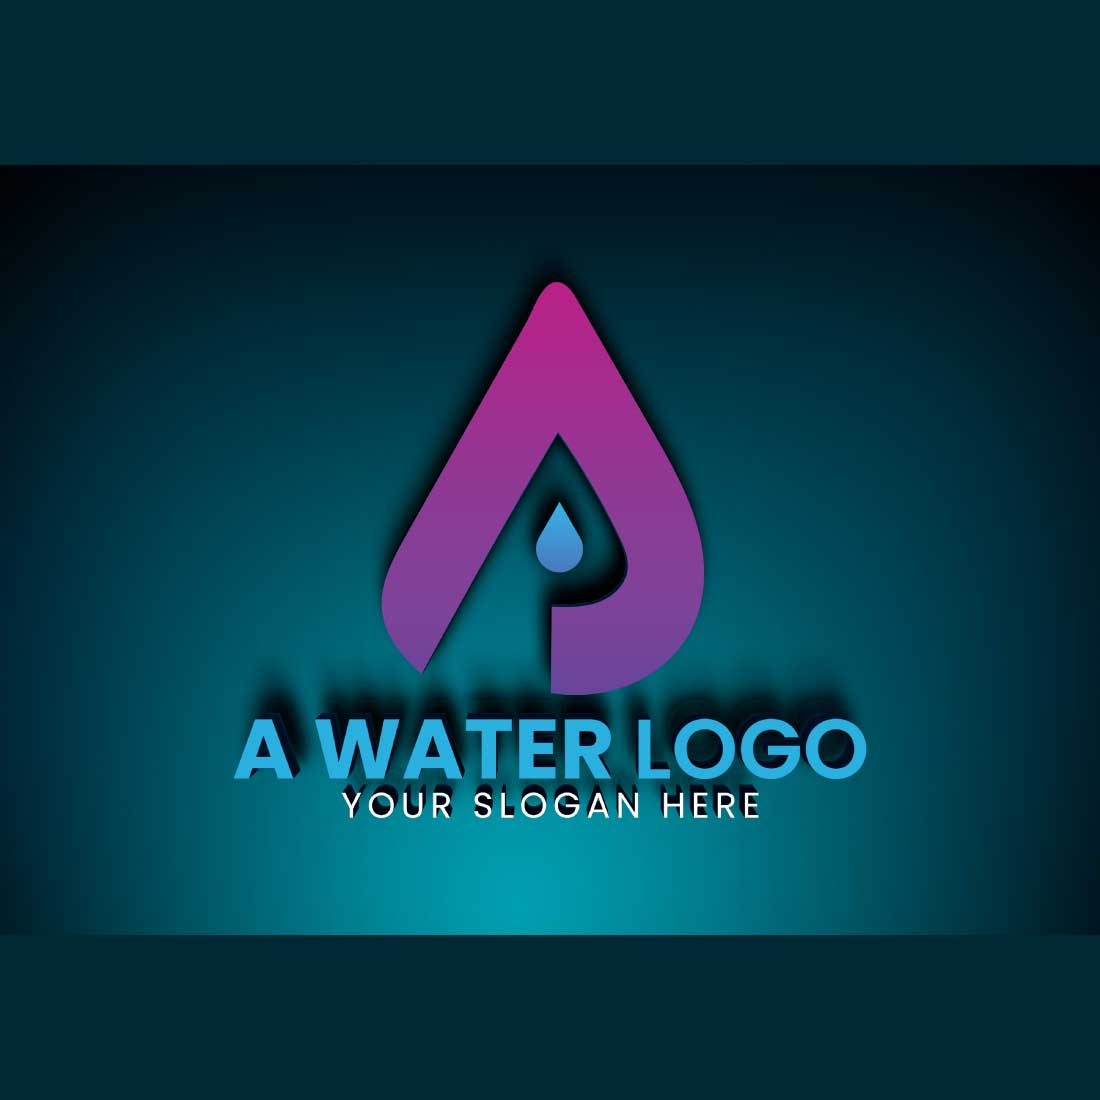 a water logo 1 962